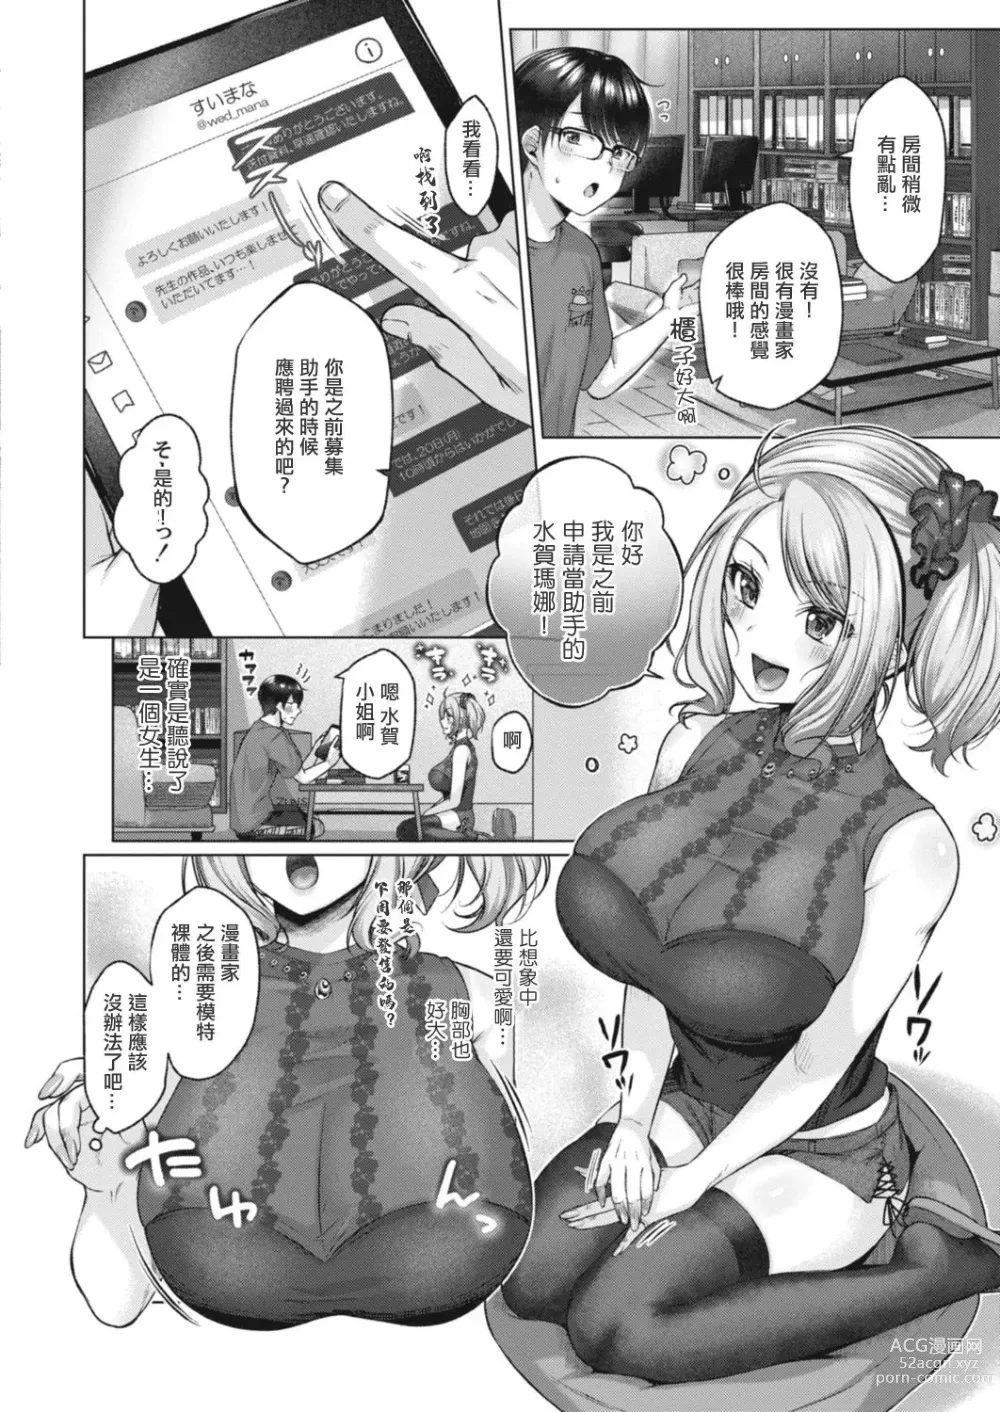 Page 2 of manga Gal Assi Coming